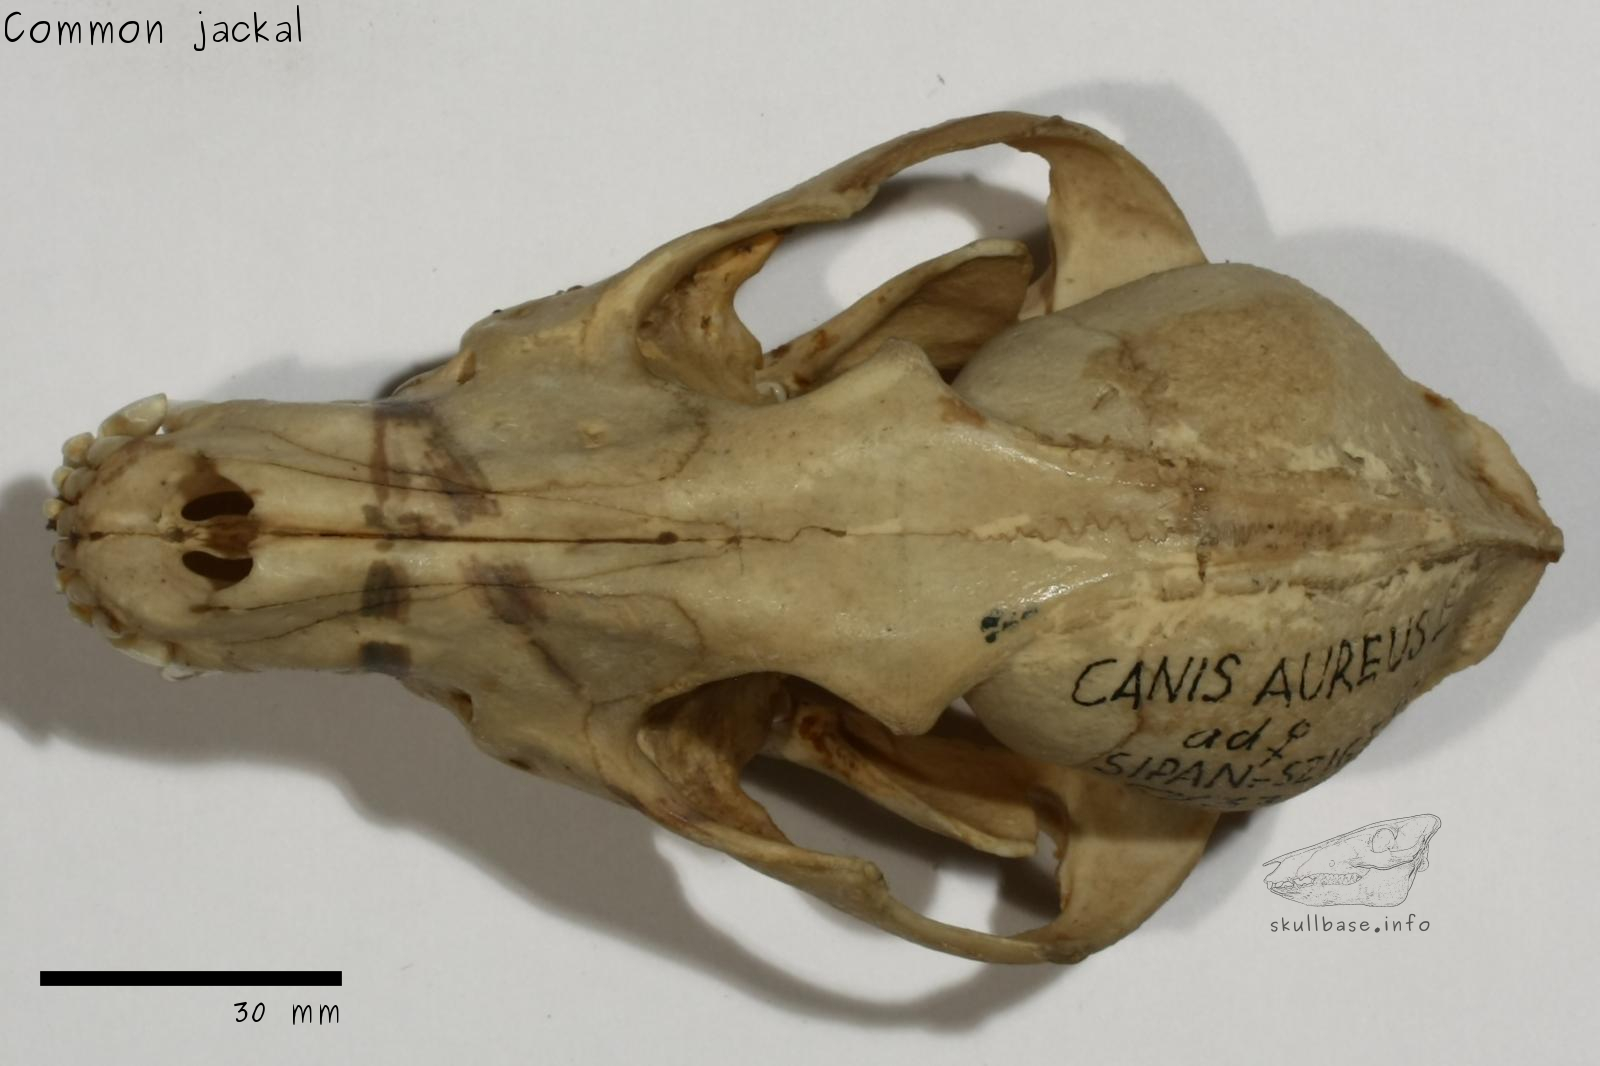 Common jackal (Canis aureus aureus) skull dorsal view